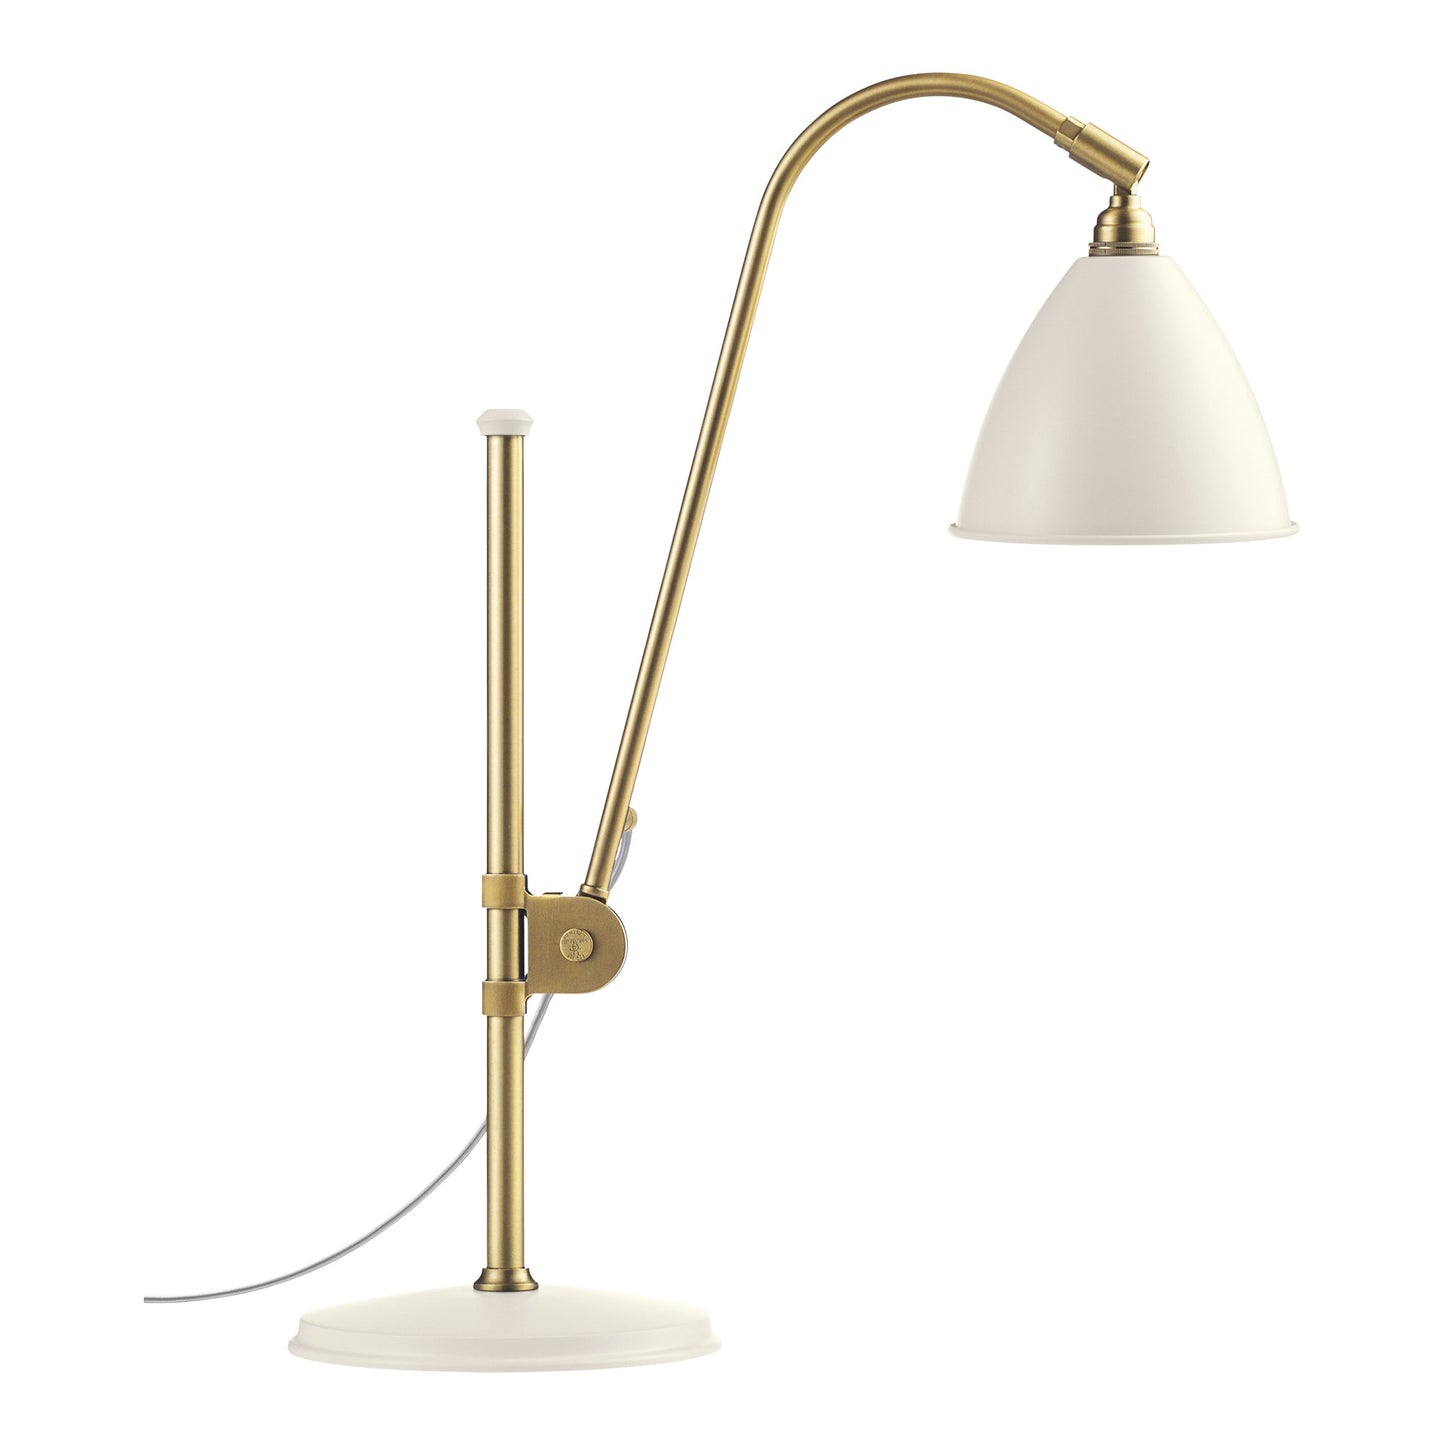 Bestlite BL1 Table Lamp by GUBI #Brass / Matte white